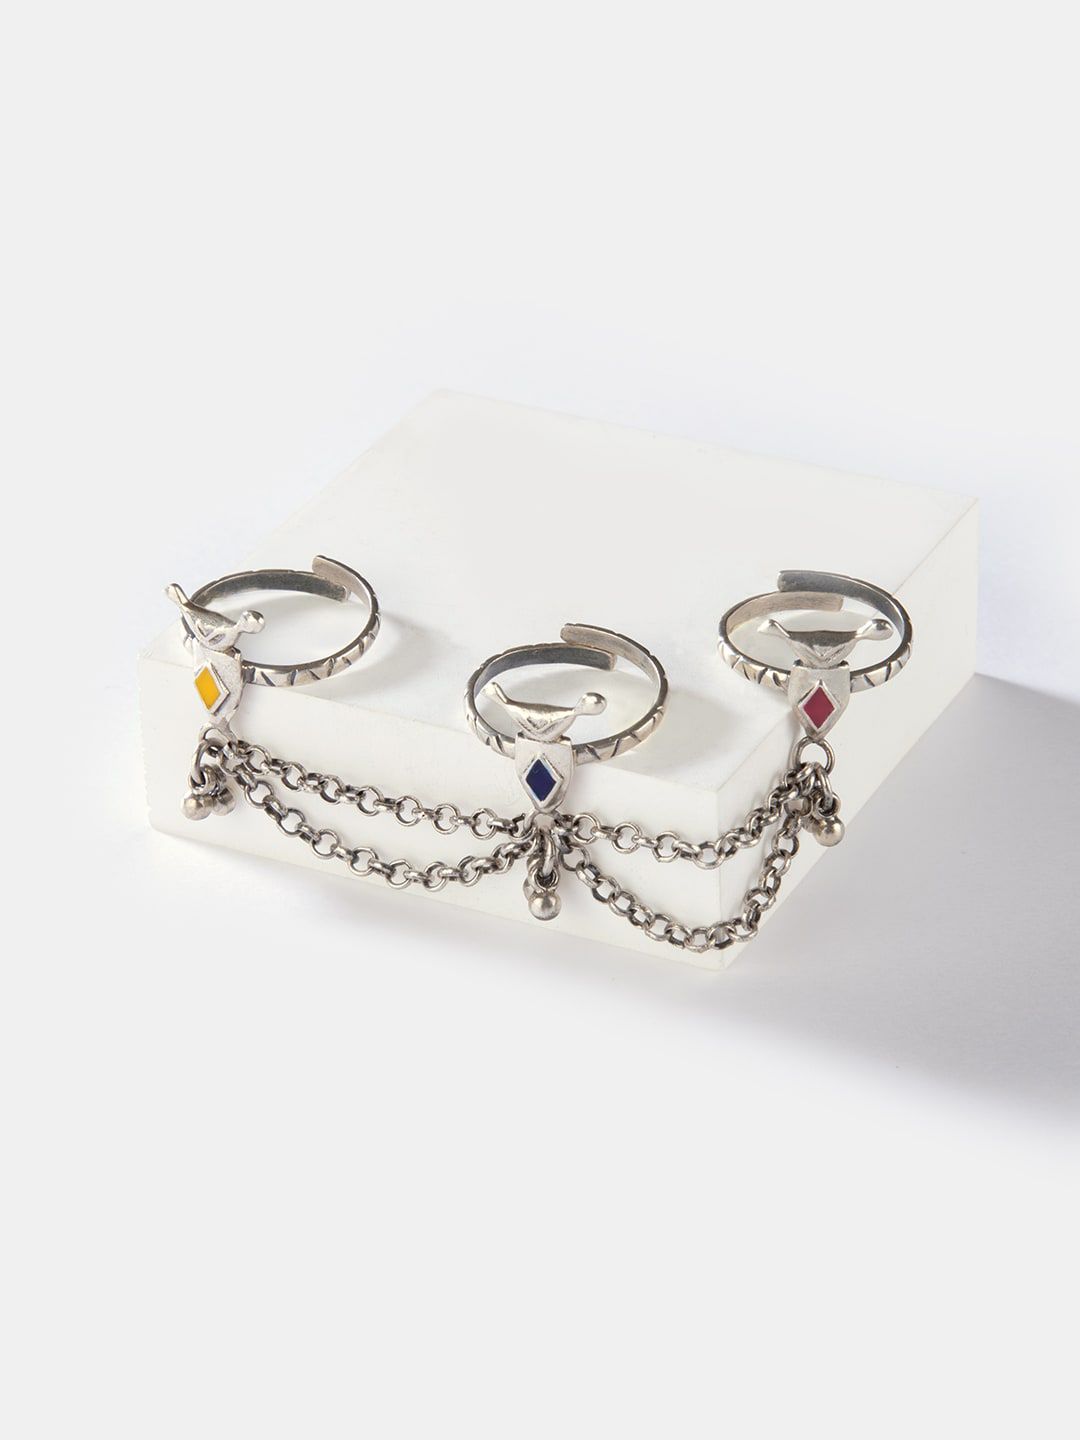 SHAYA Oxidised Silver-Toned & Yellow Stone-Studded Toe Ring Price in India